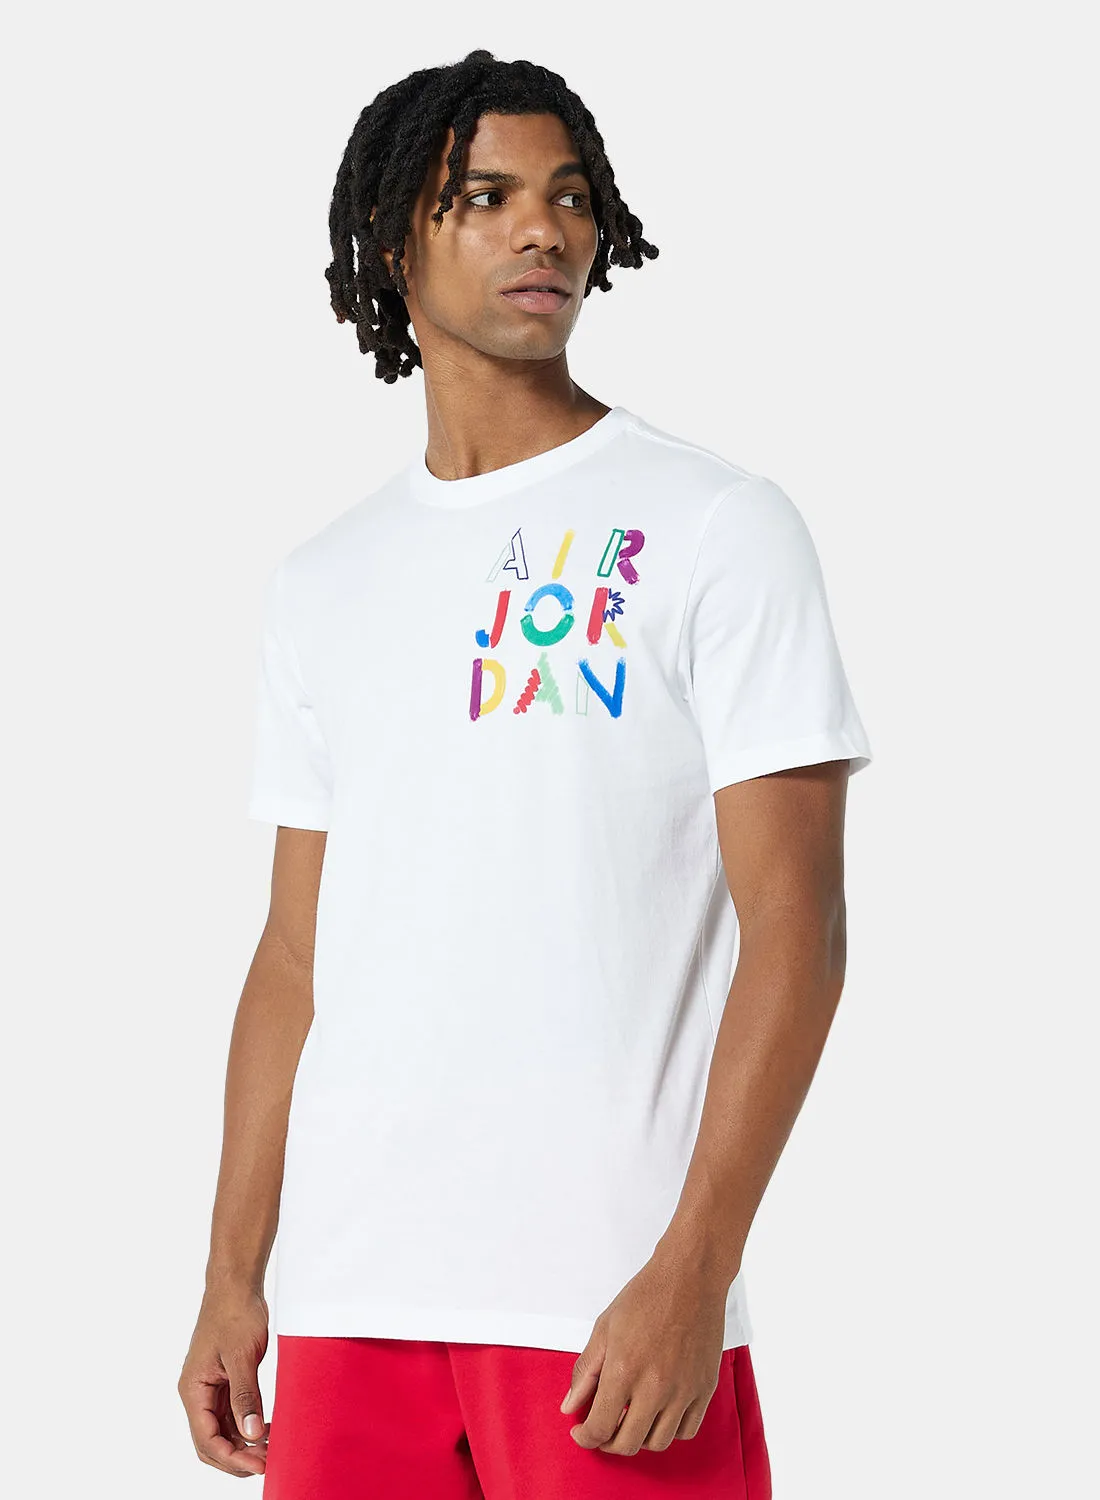 JORDAN Graphics Crew T-Shirt